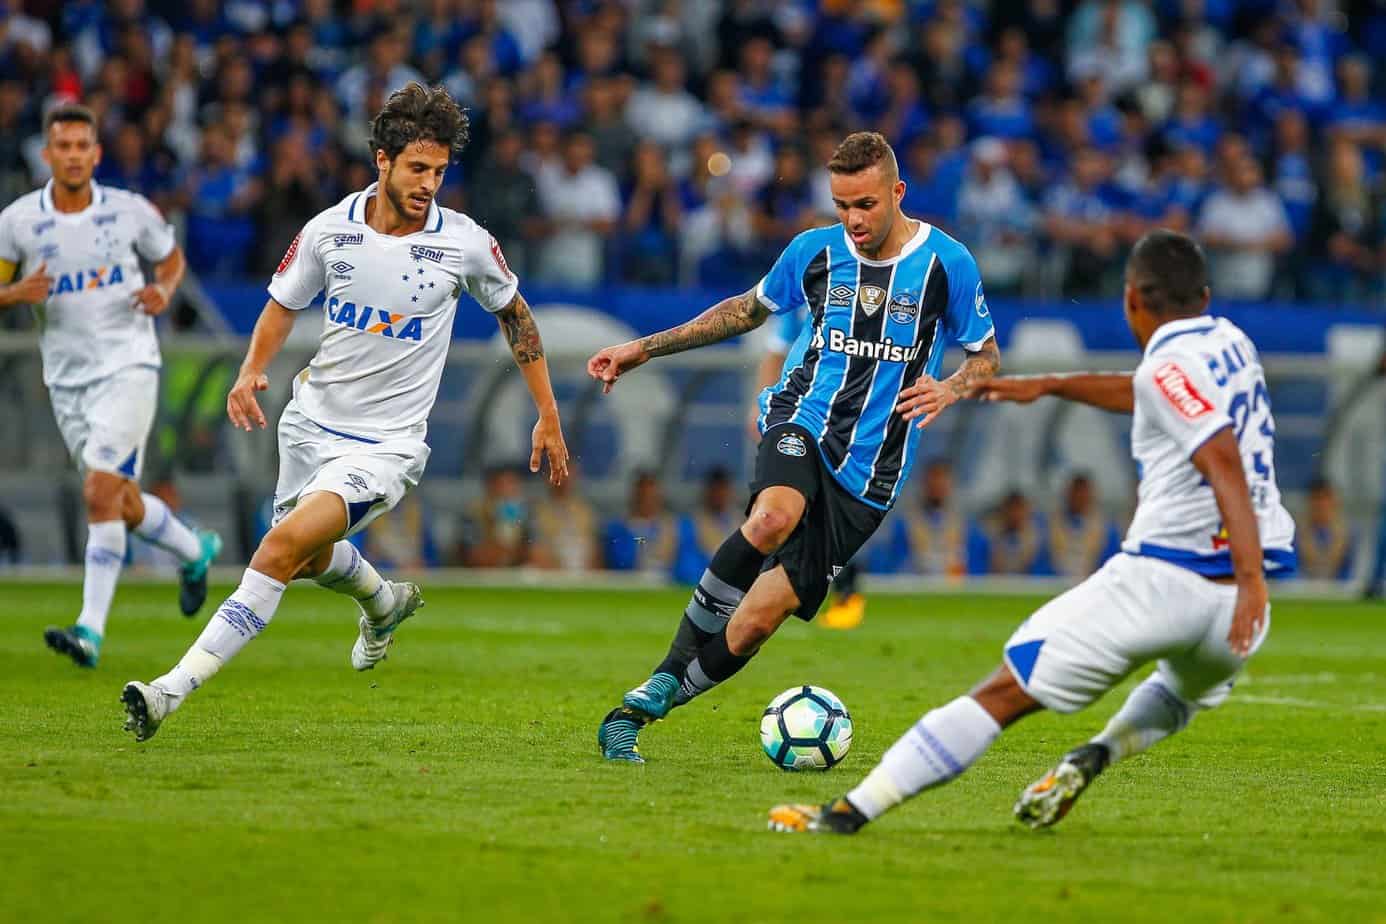 Grêmio vs. Cruzeiro Betting Odds and Preview